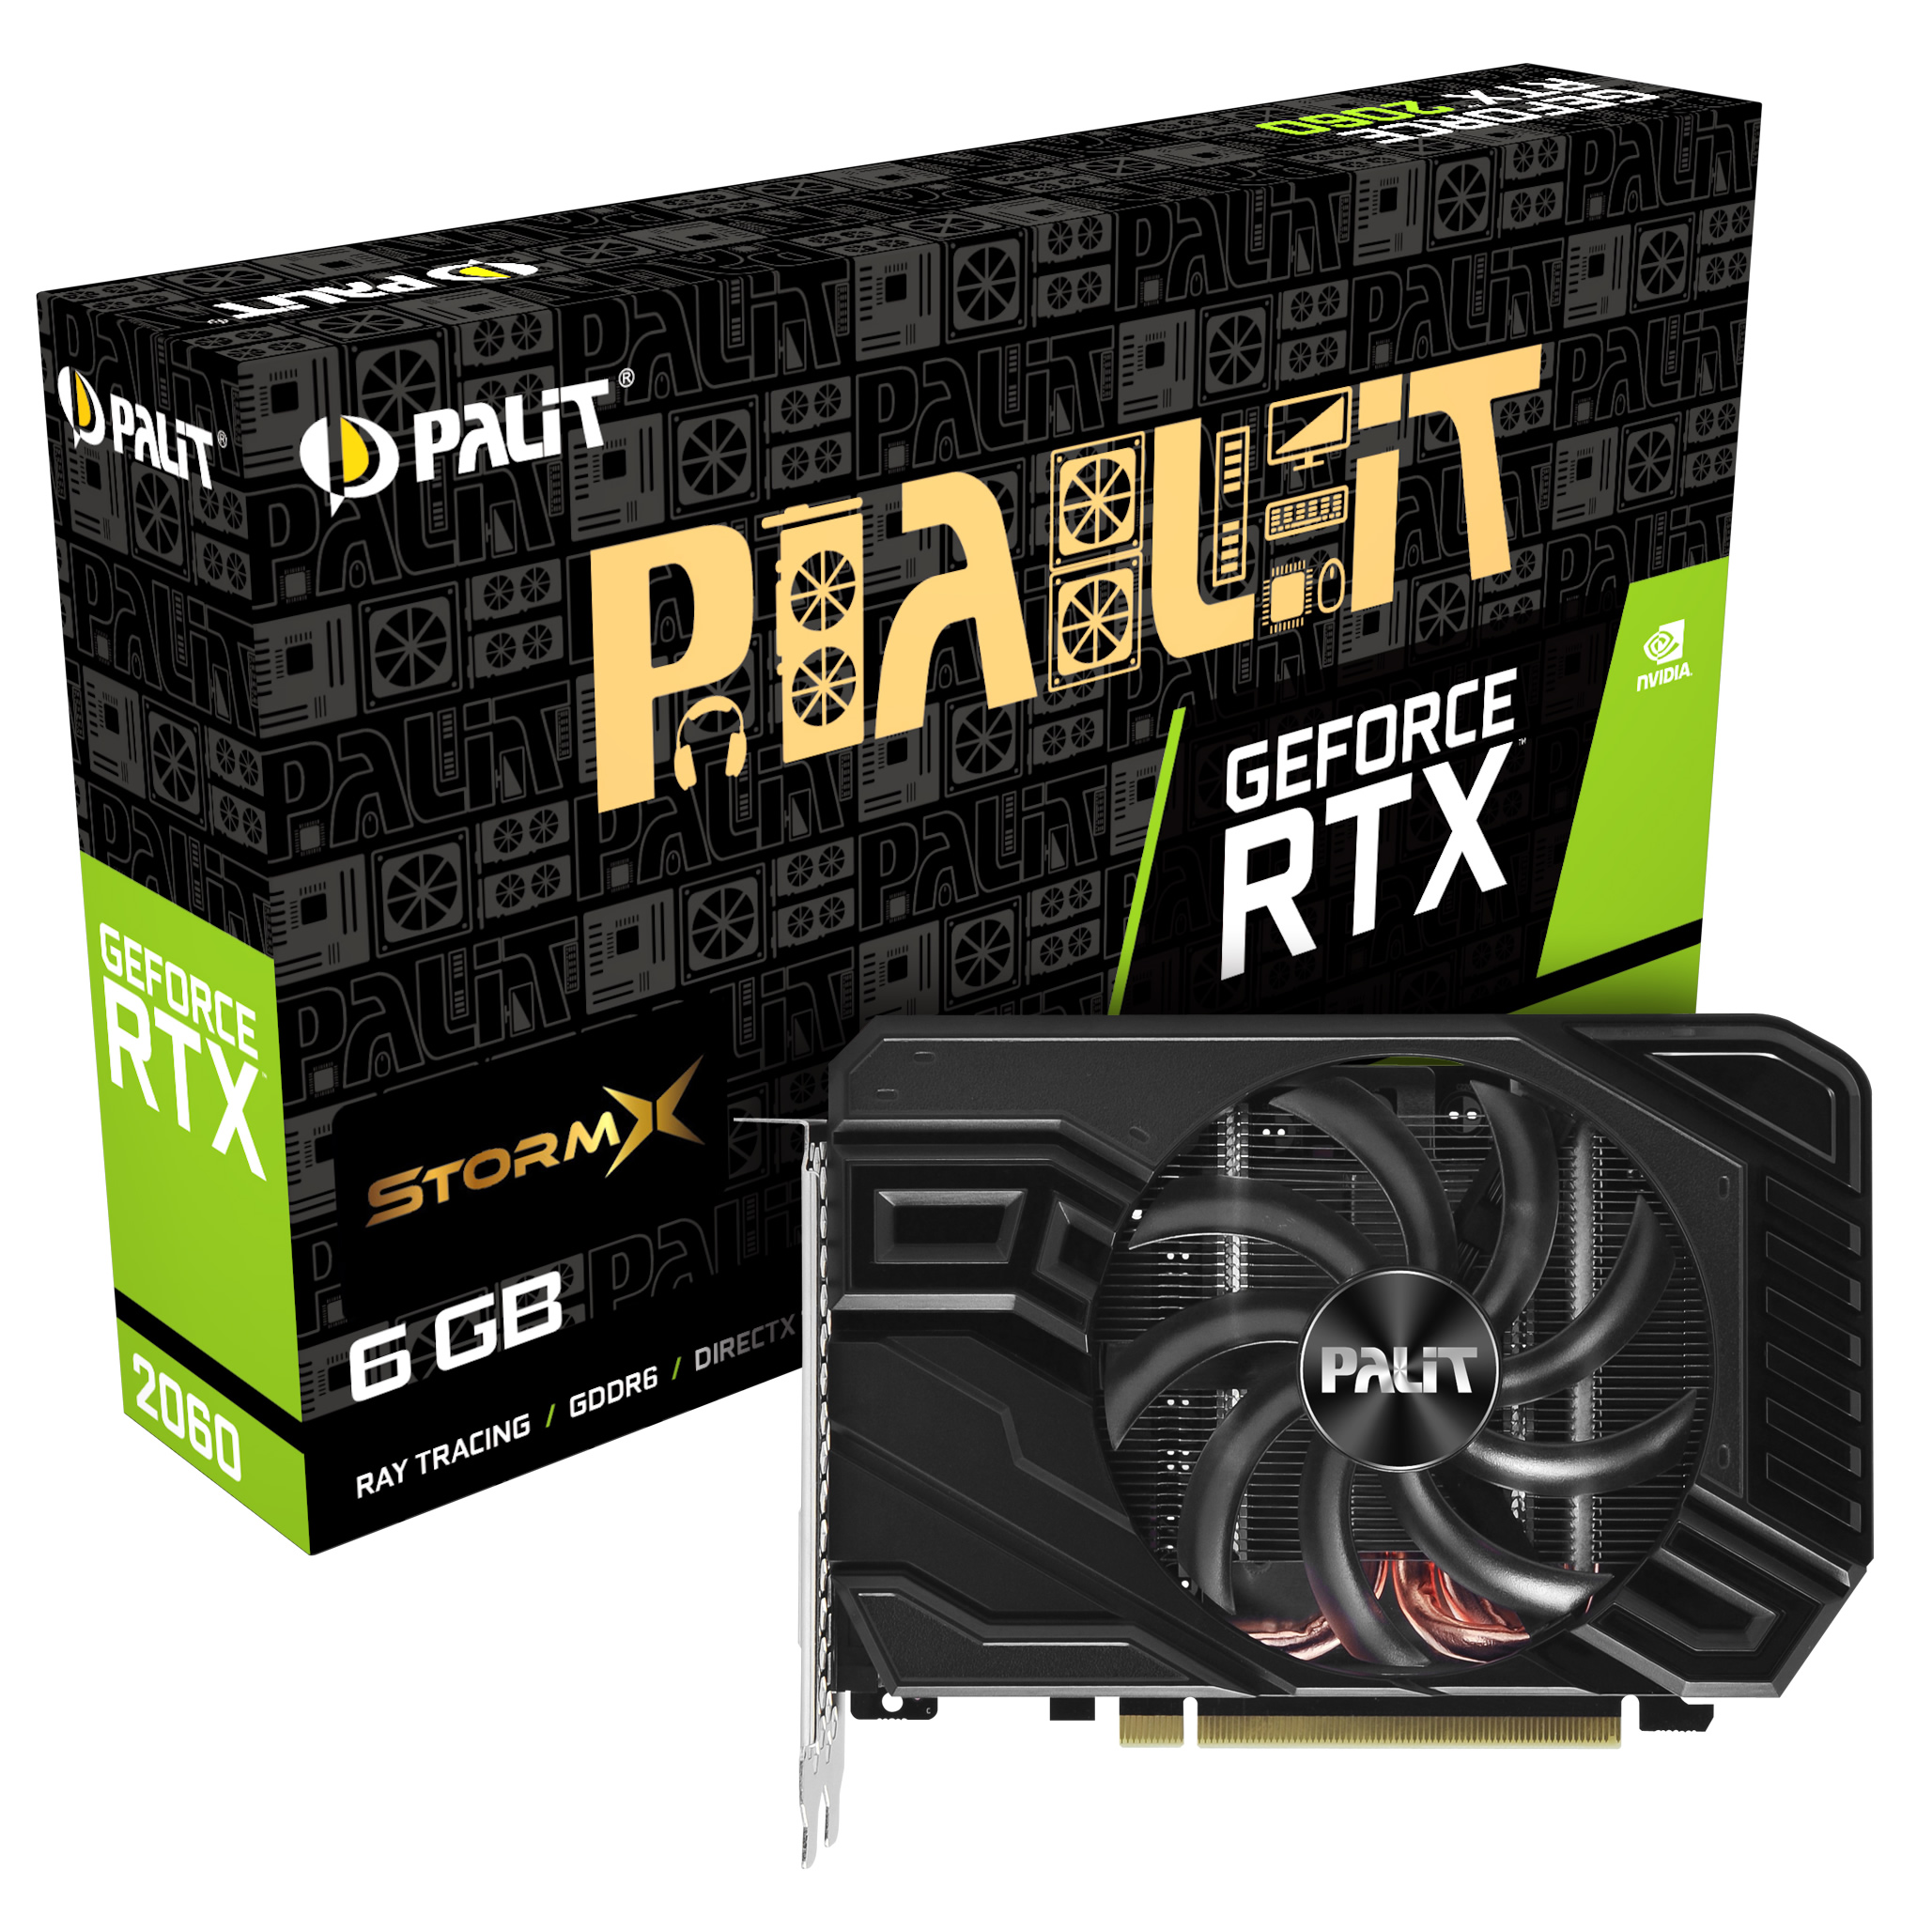 Palit GeForce RTX 2060 StormX 6144MB GDDR6 PCI-Express Graphics Card